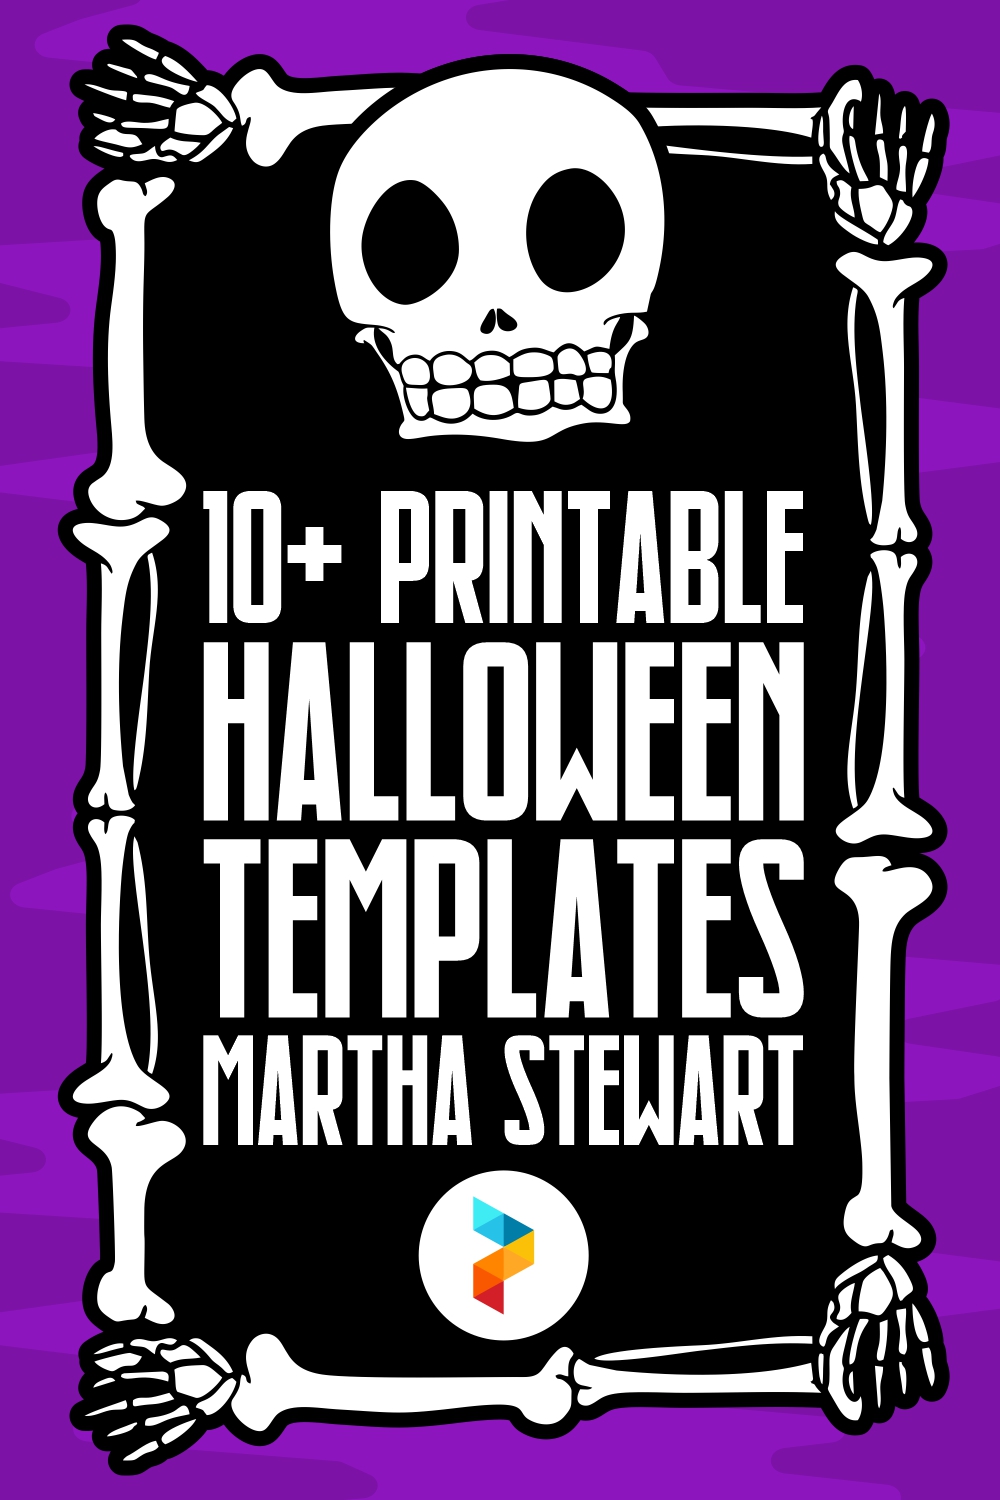 Printable Halloween Templates Martha Stewart